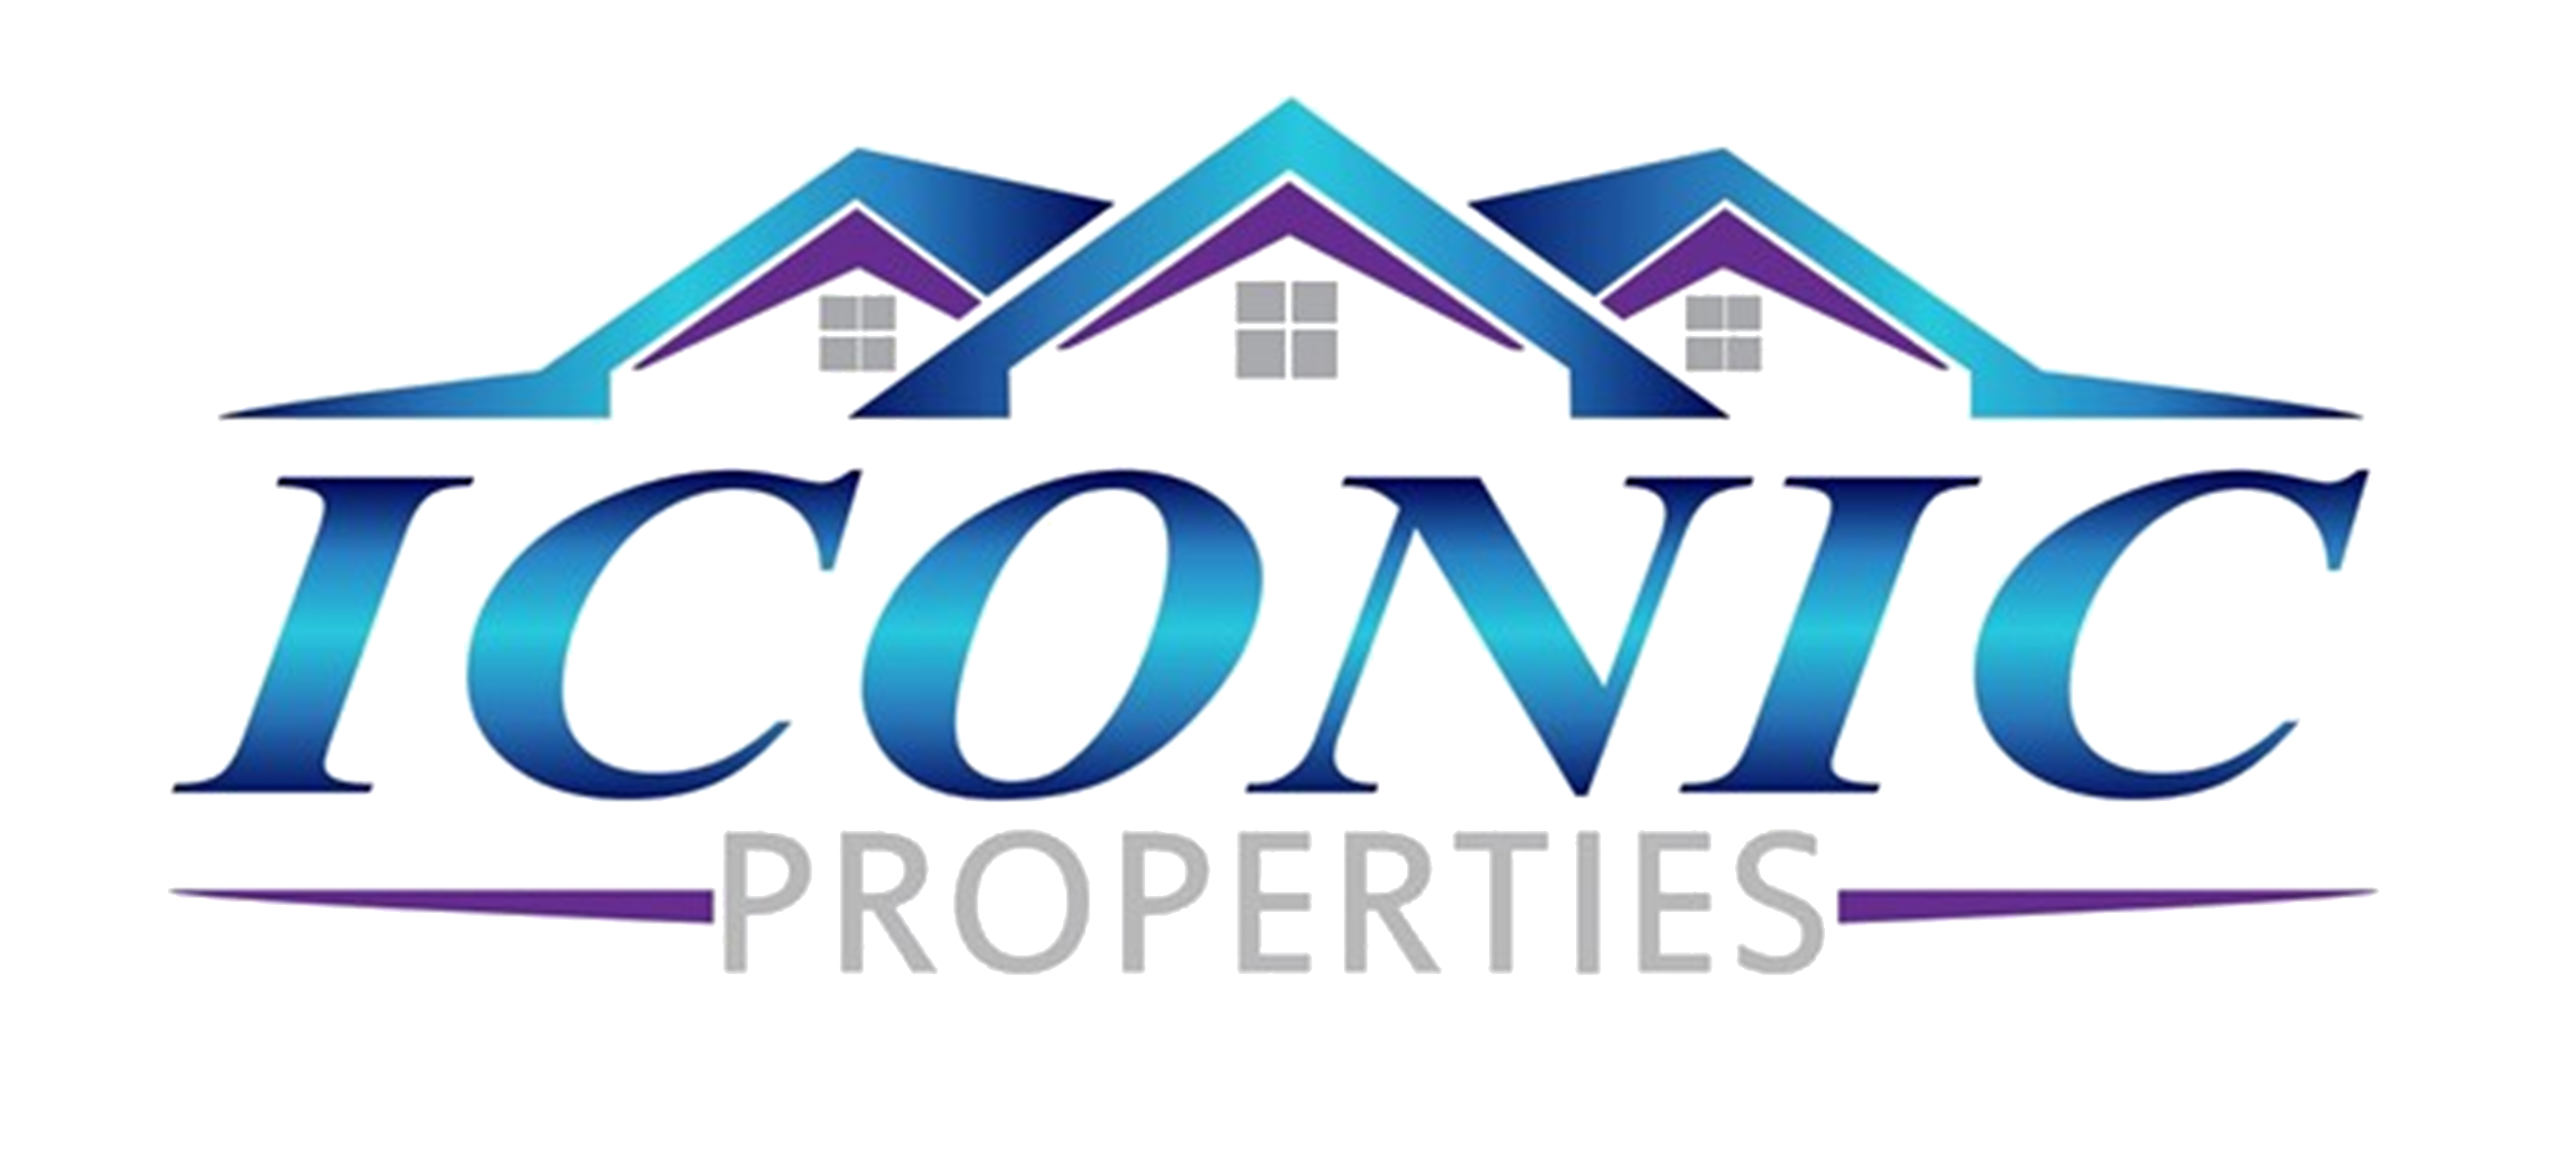 Iconic Properties LLC